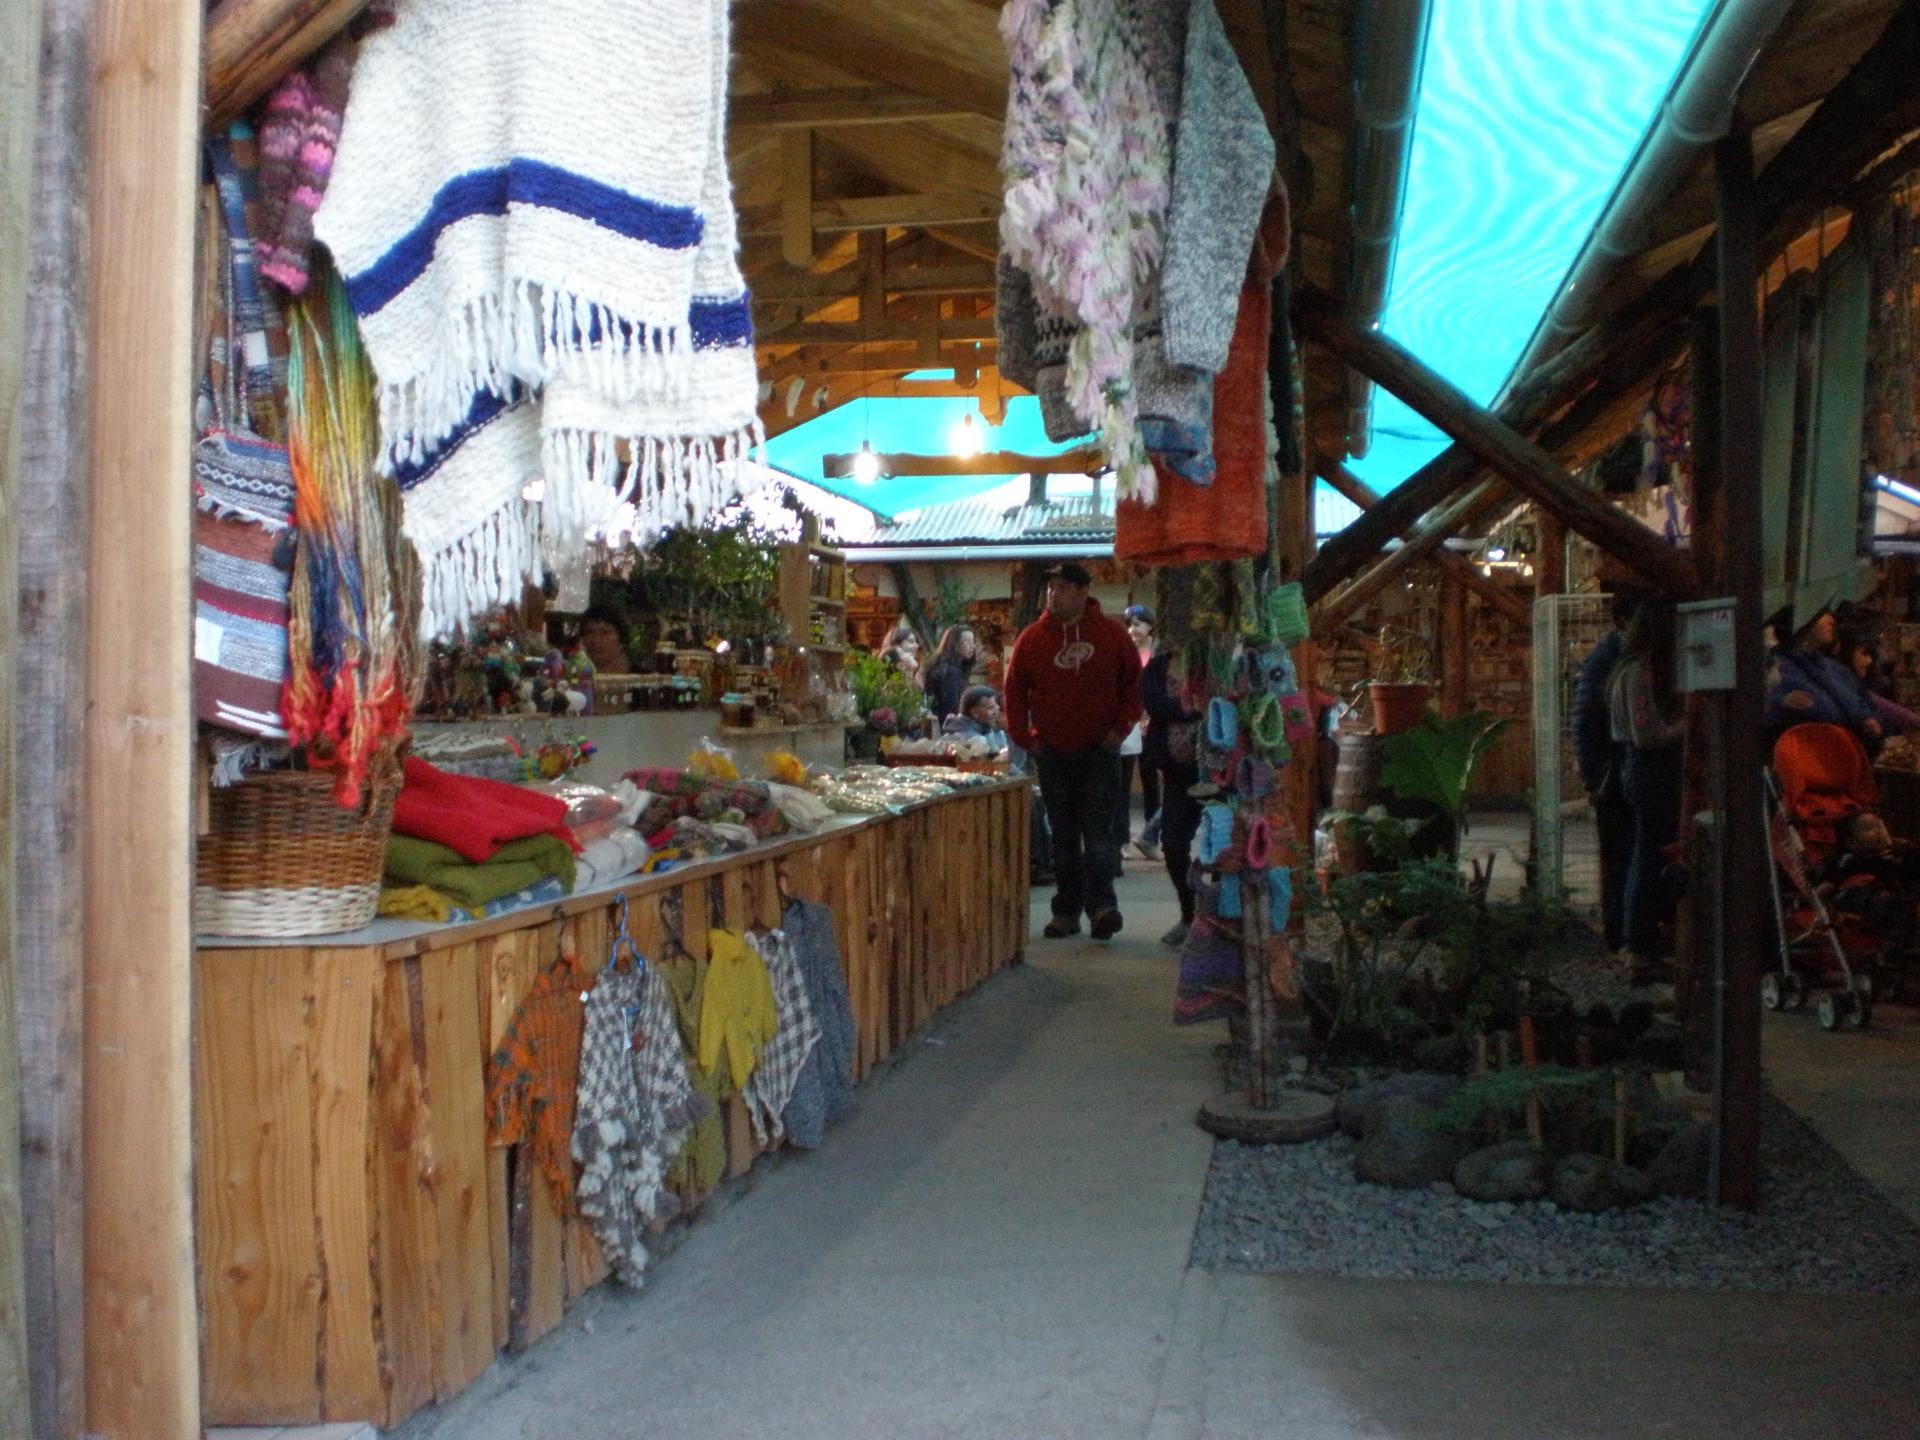 Marché artisanal mapuche